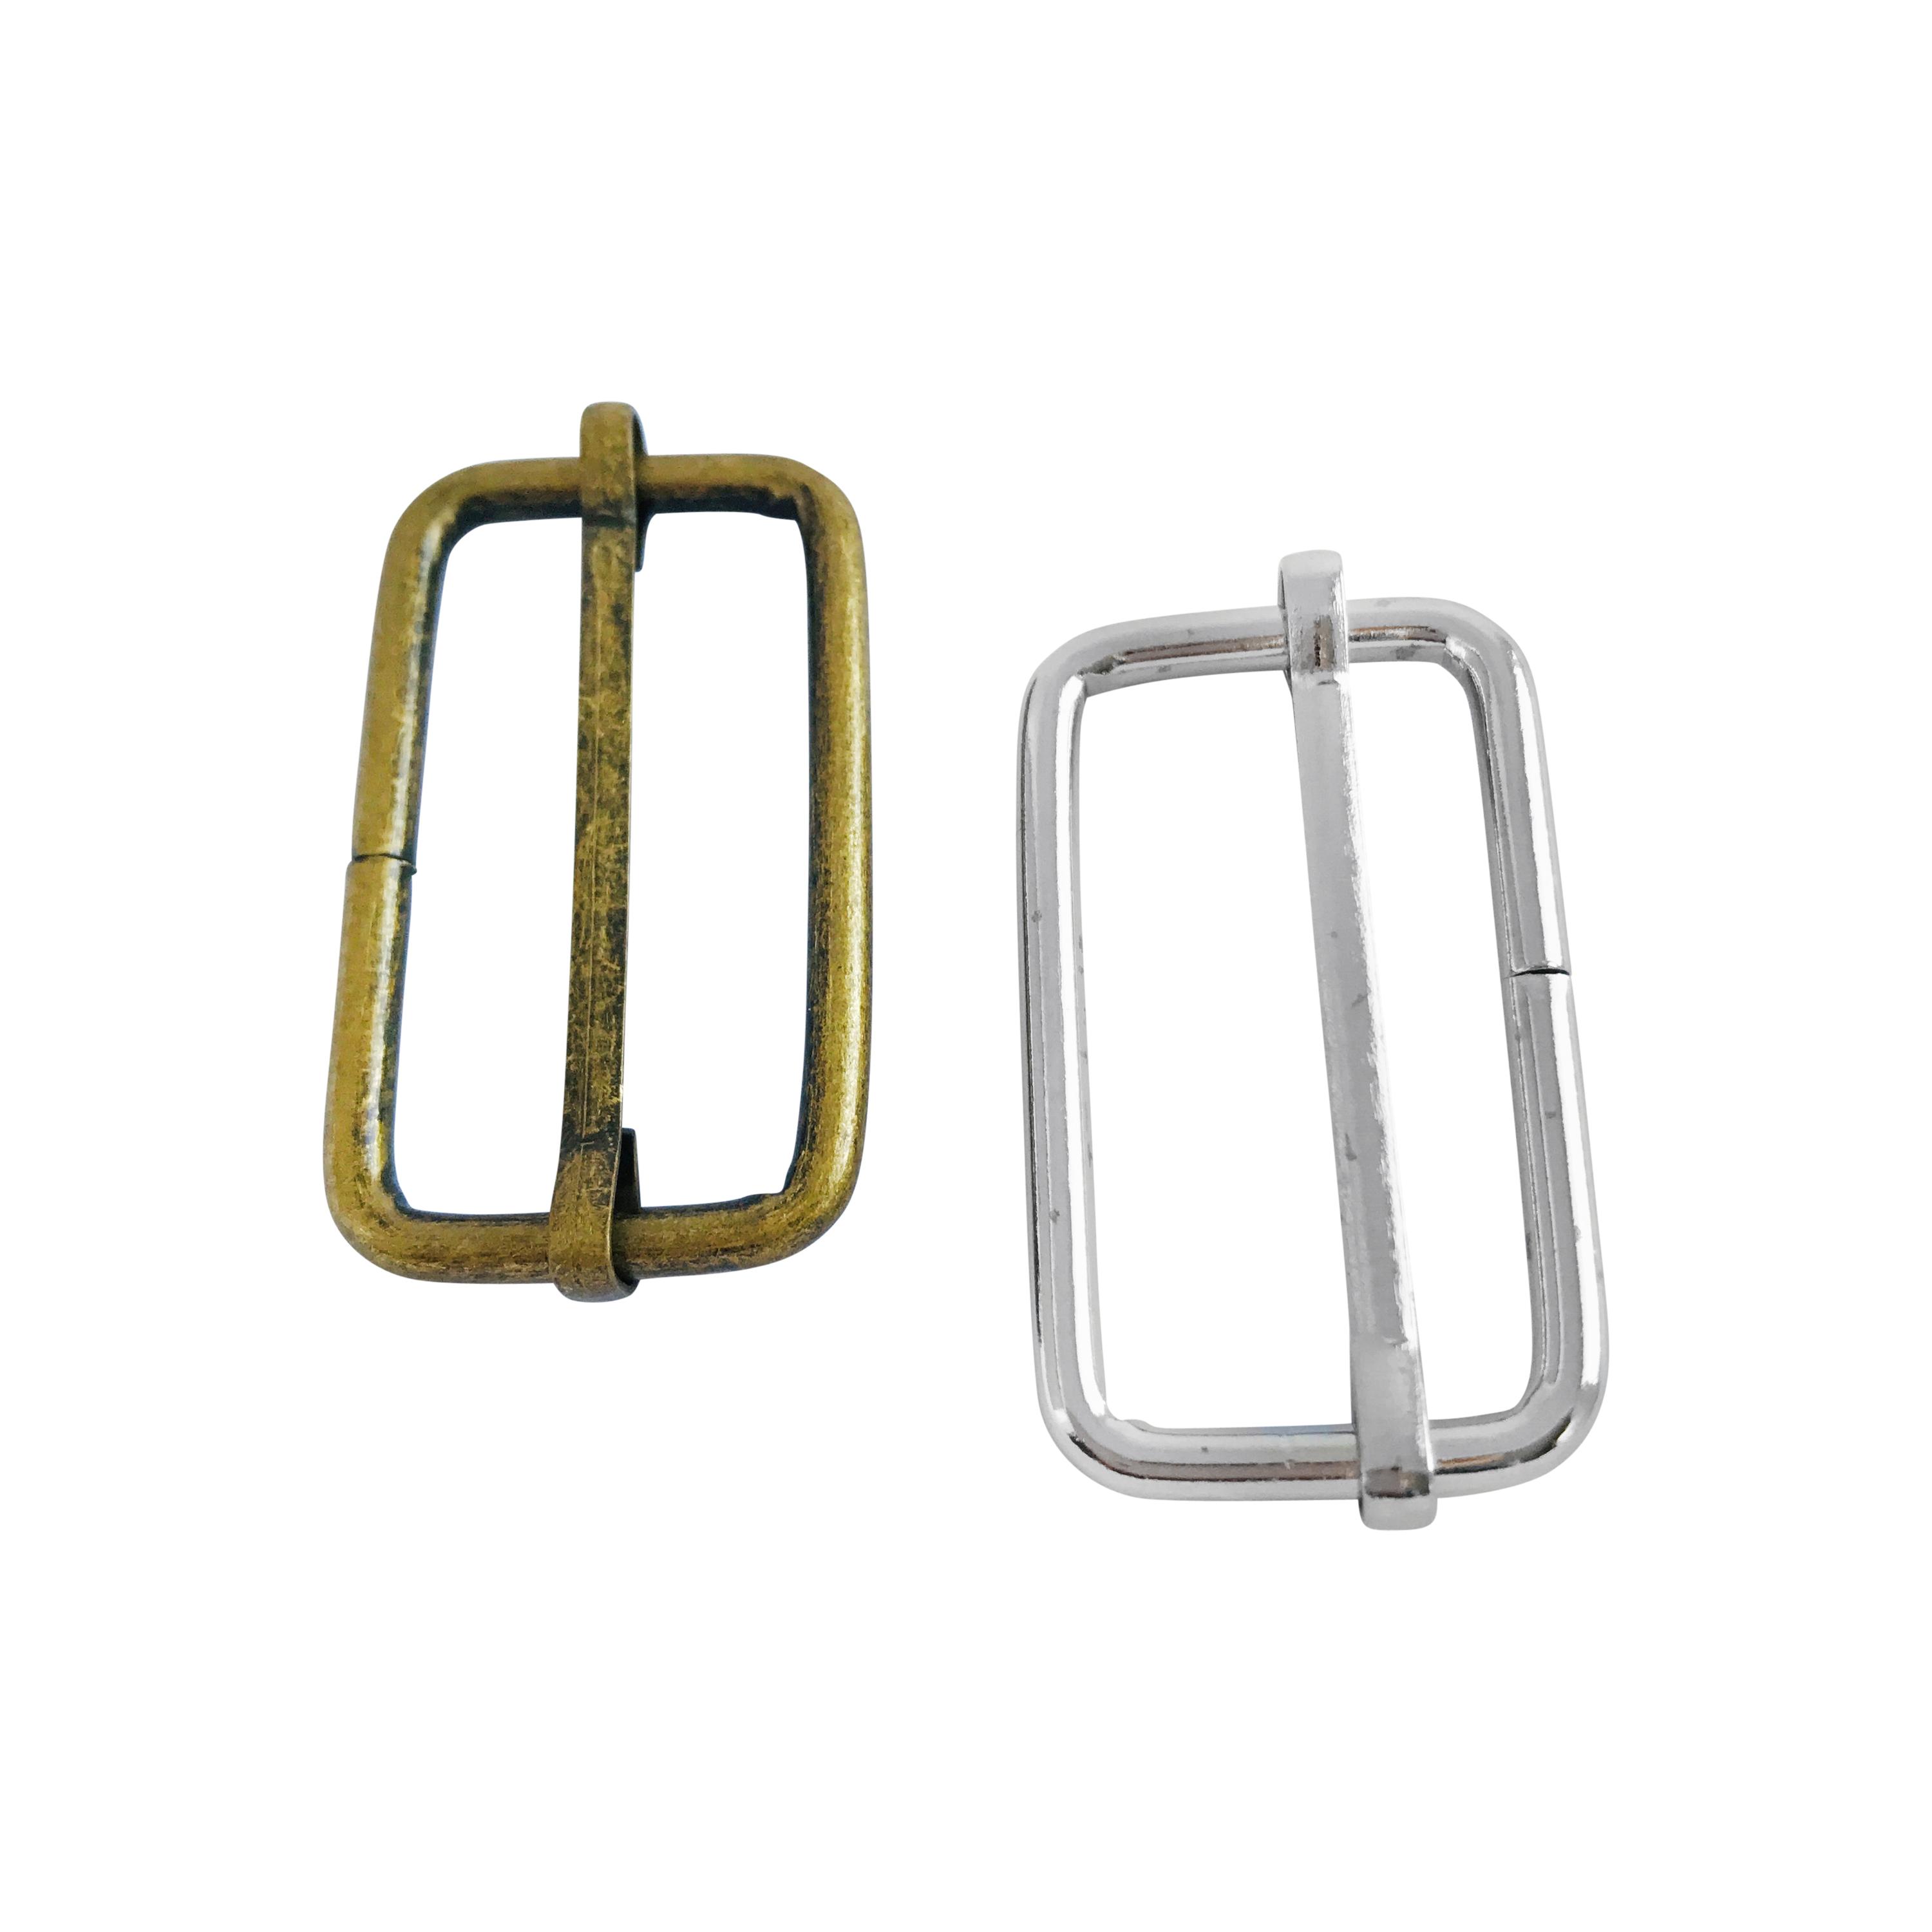 11/2(38mm) wire formed slider buckle in silver or antique brass finish, to make adjustable bag straps